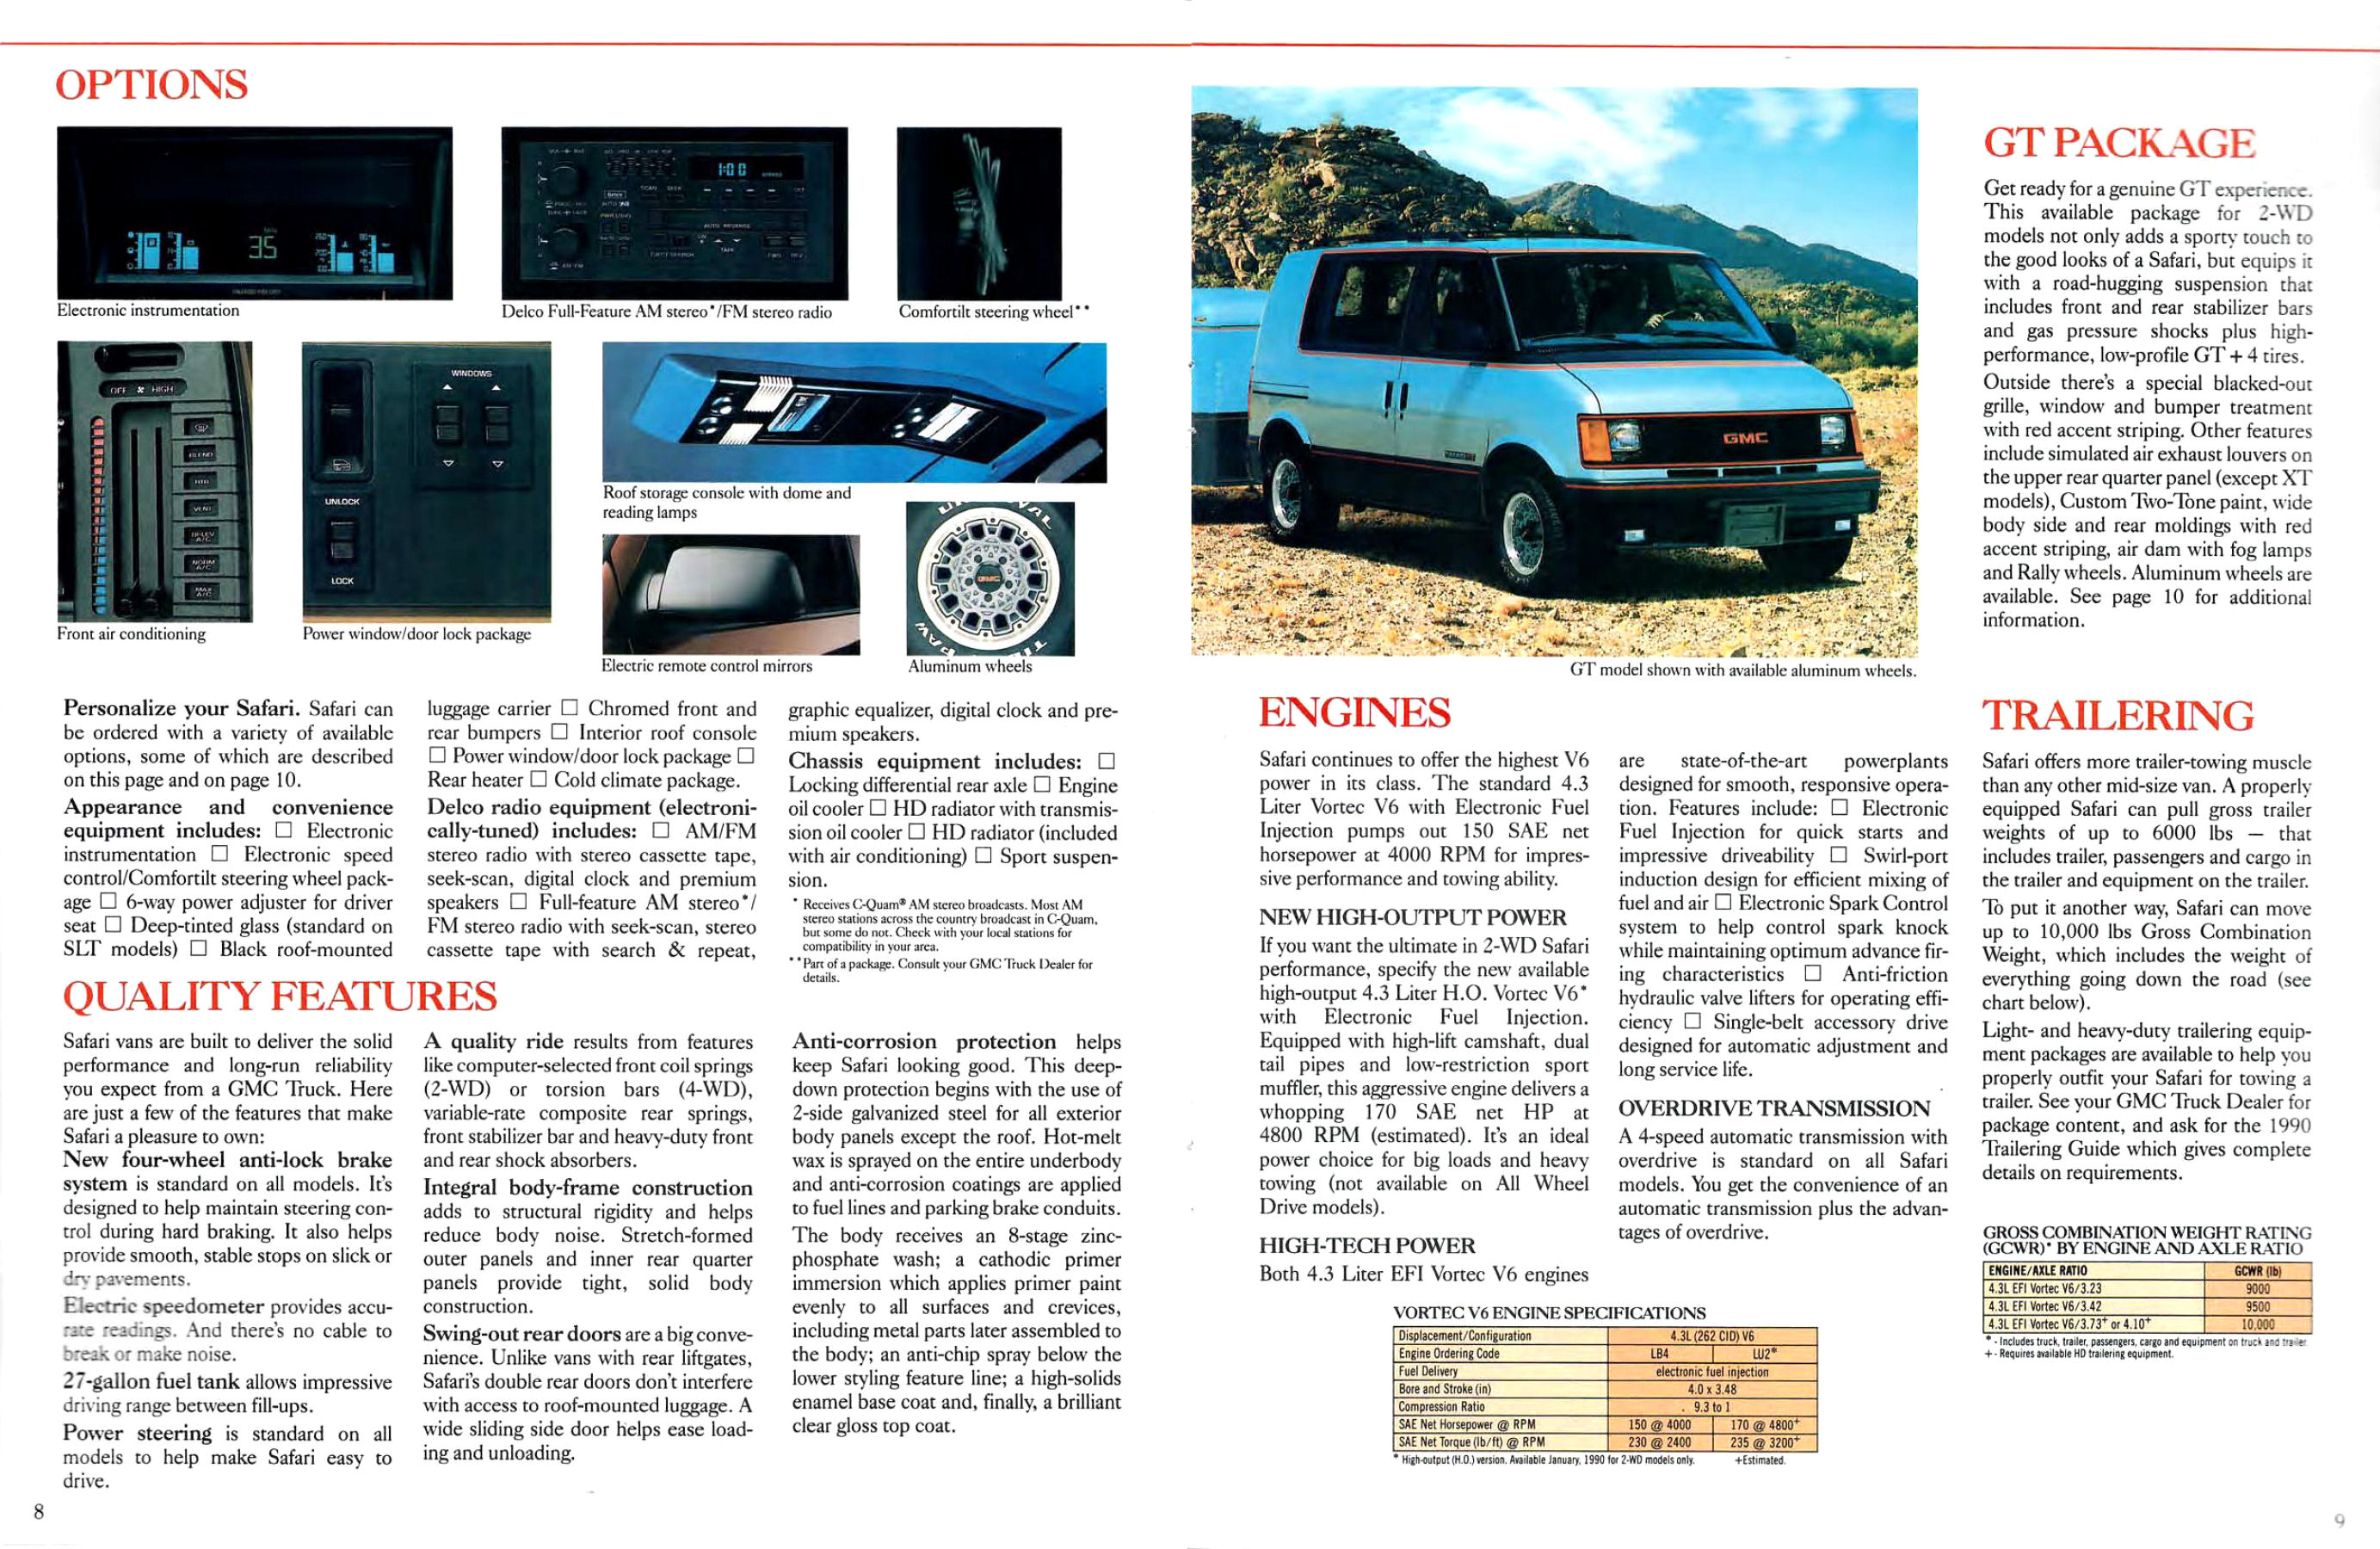 1990 GMC Safari-08-09